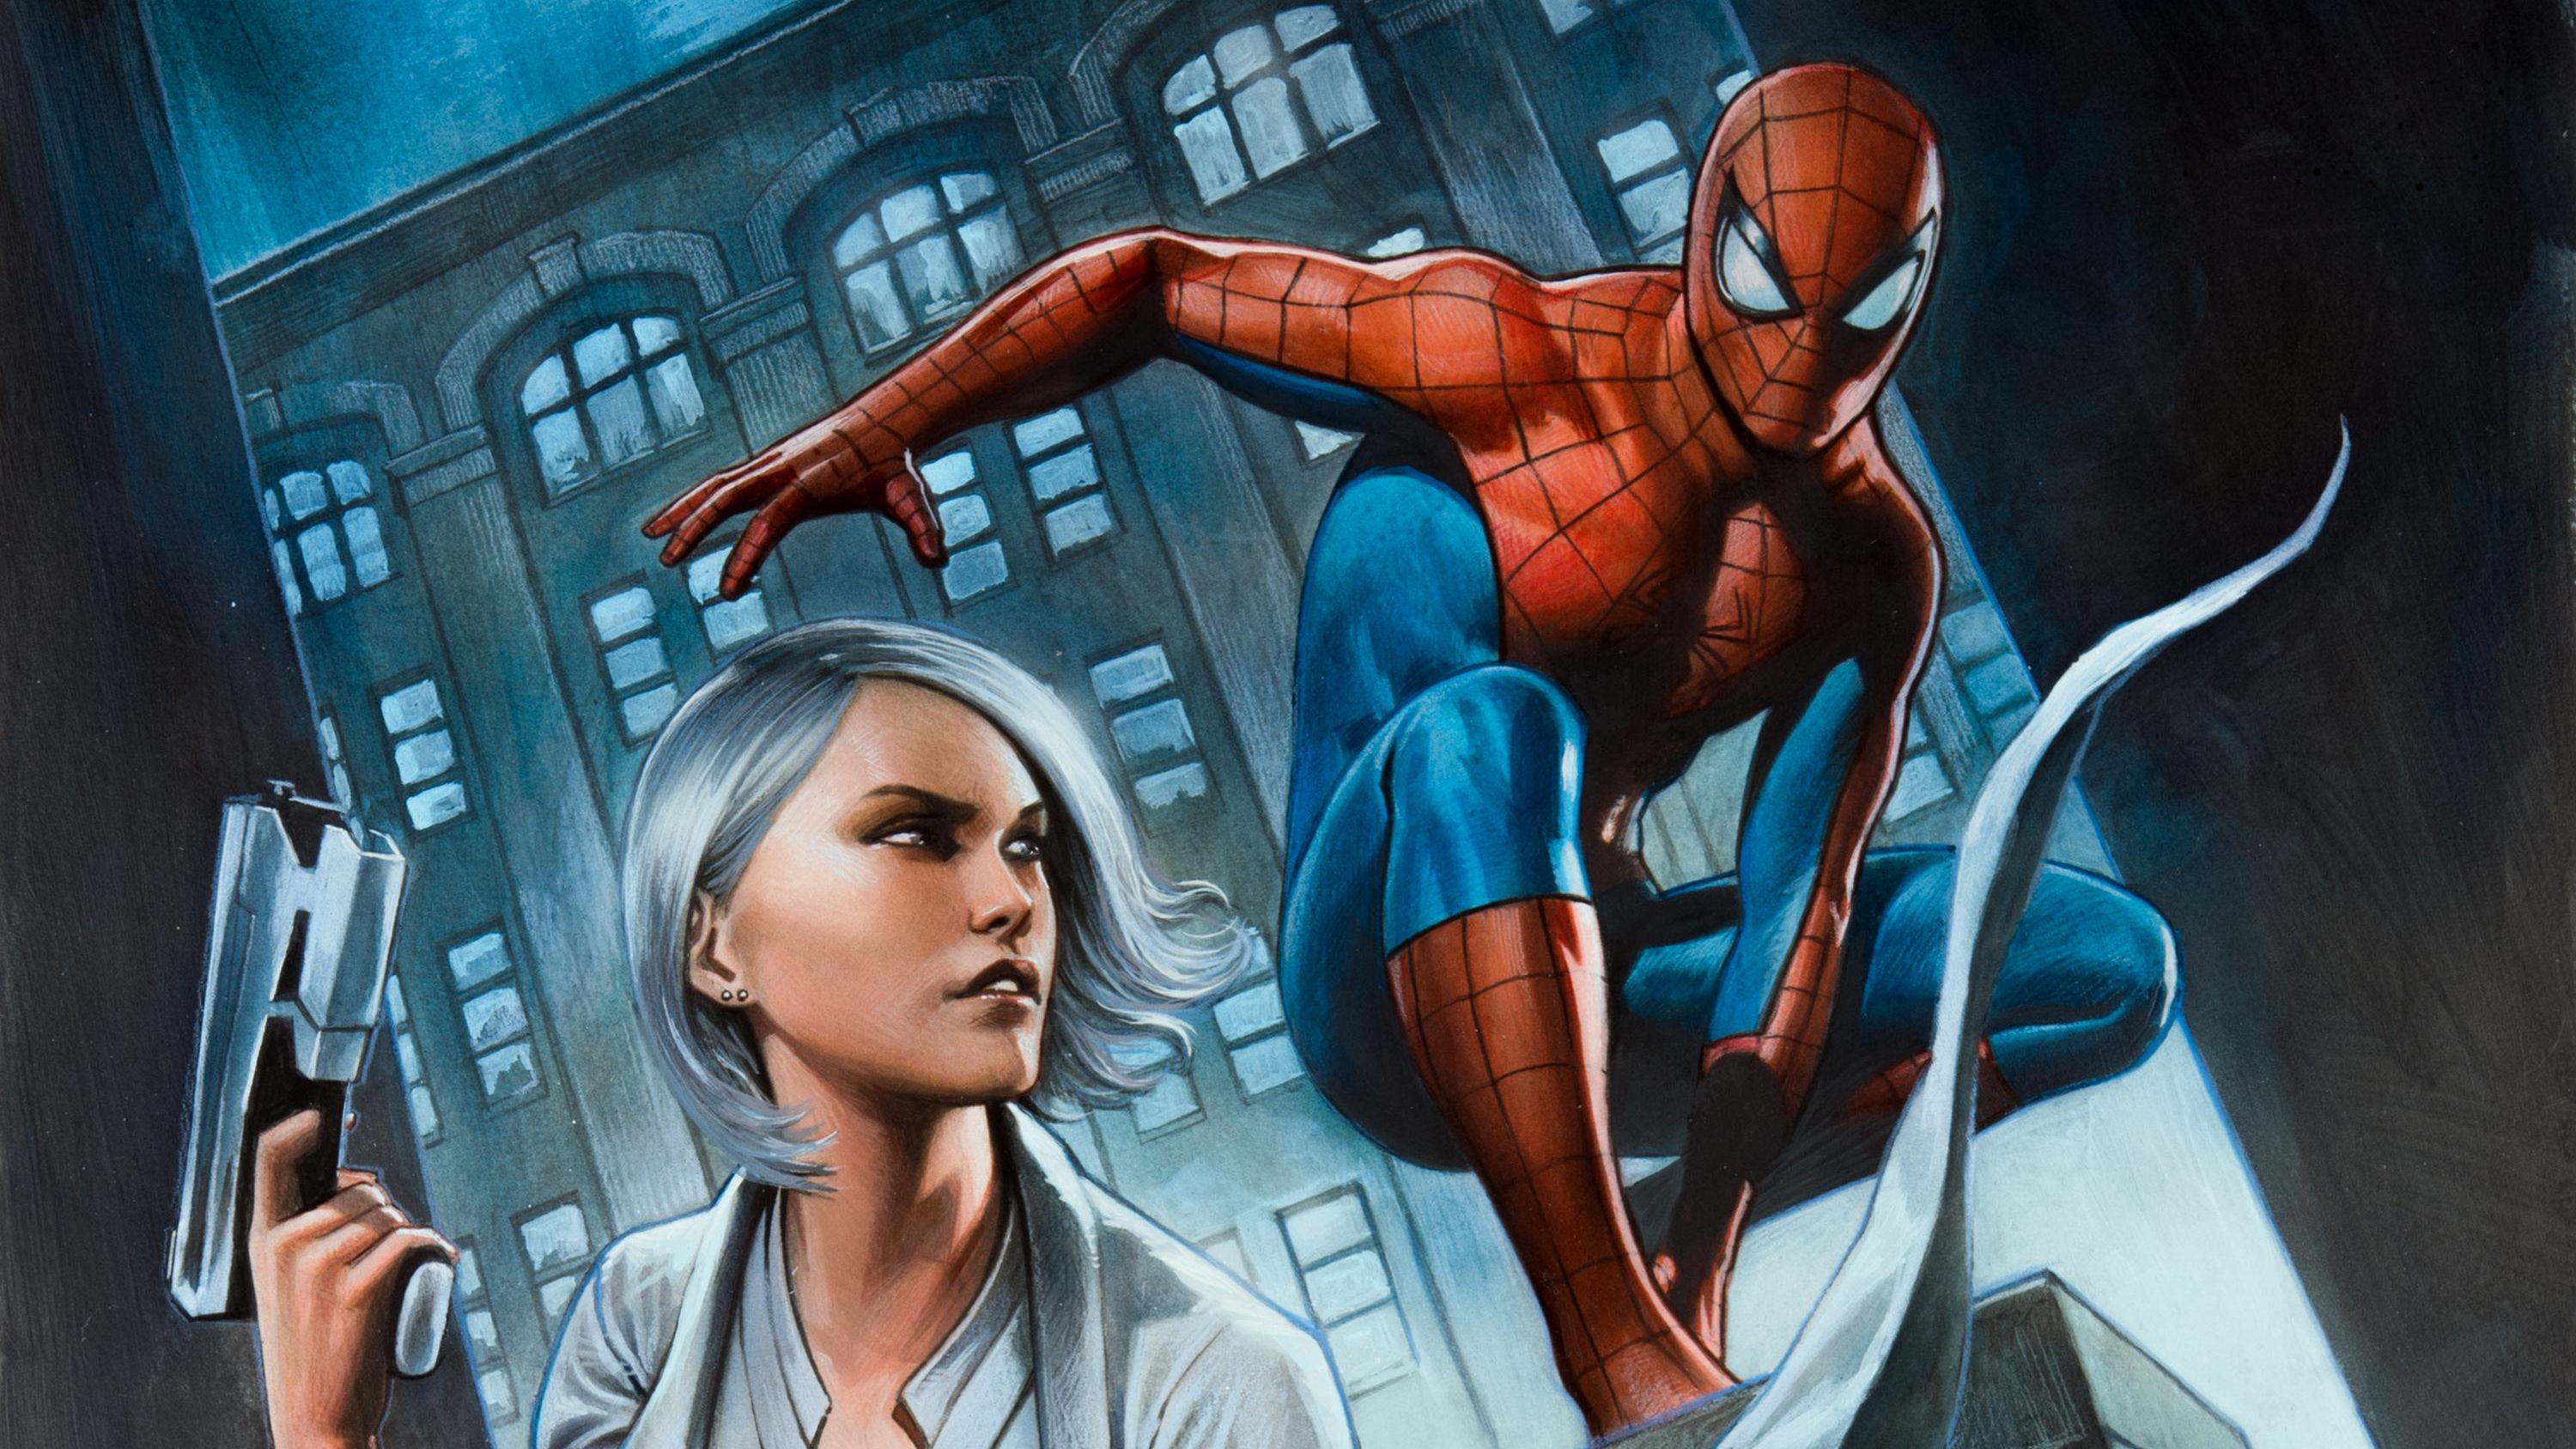 Spider Man (PS4) Wallpaper. HD Spider Man (PS4) Background